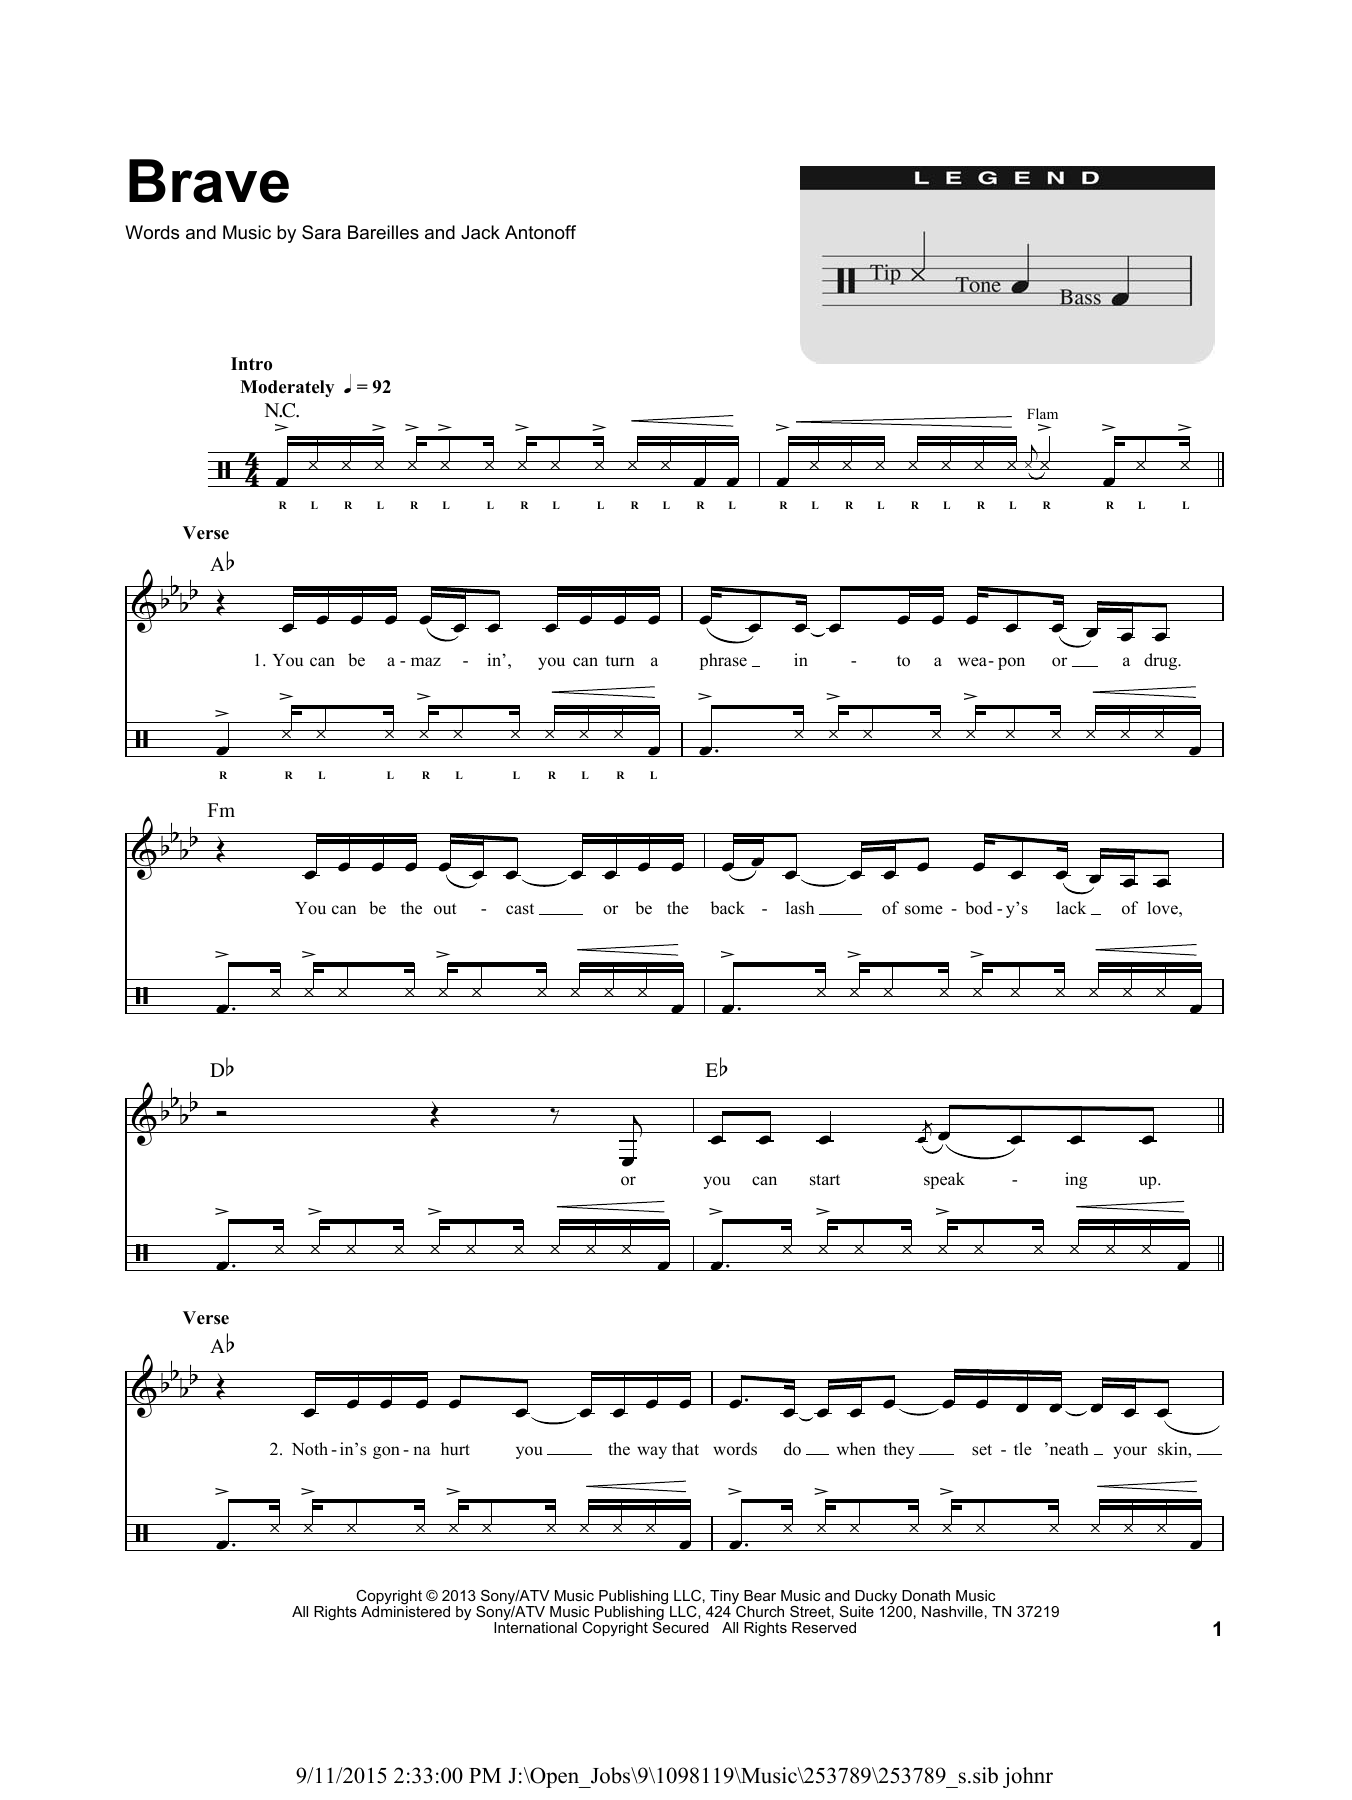 Sara Bareilles Brave Sheet Music Notes & Chords for Drums Transcription - Download or Print PDF